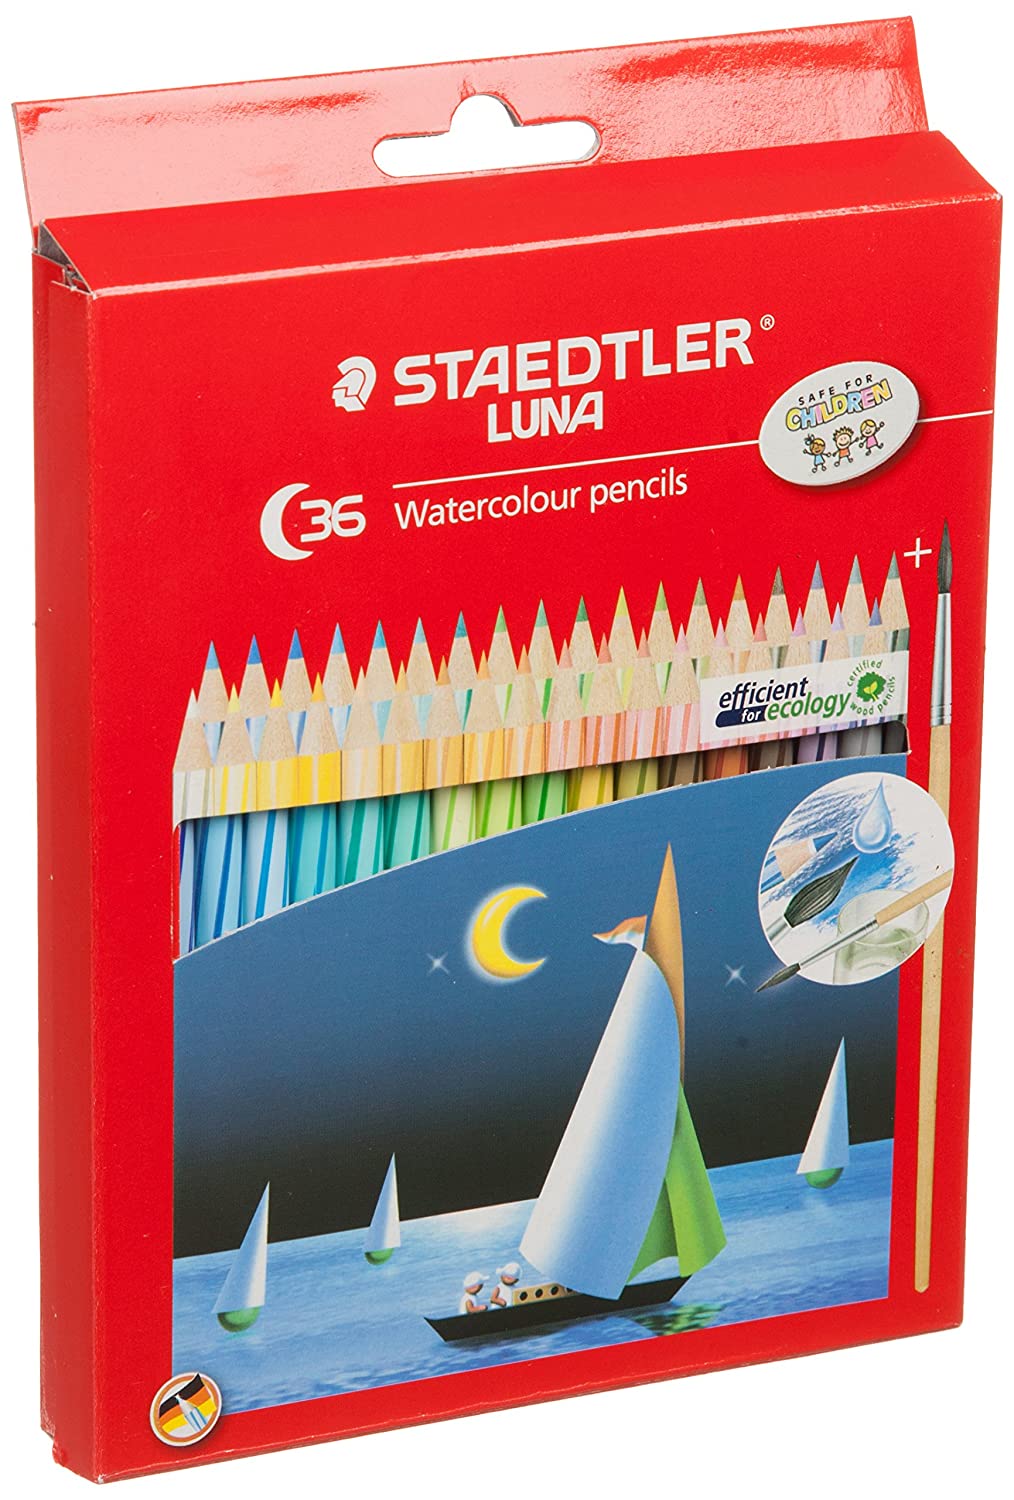 Detec™ Staedtler Luna Aquarelle वॉटर कलर पेंसिल, कैटलॉग और मैकेनिकल पेंसिल के साथ 36 शेड्स